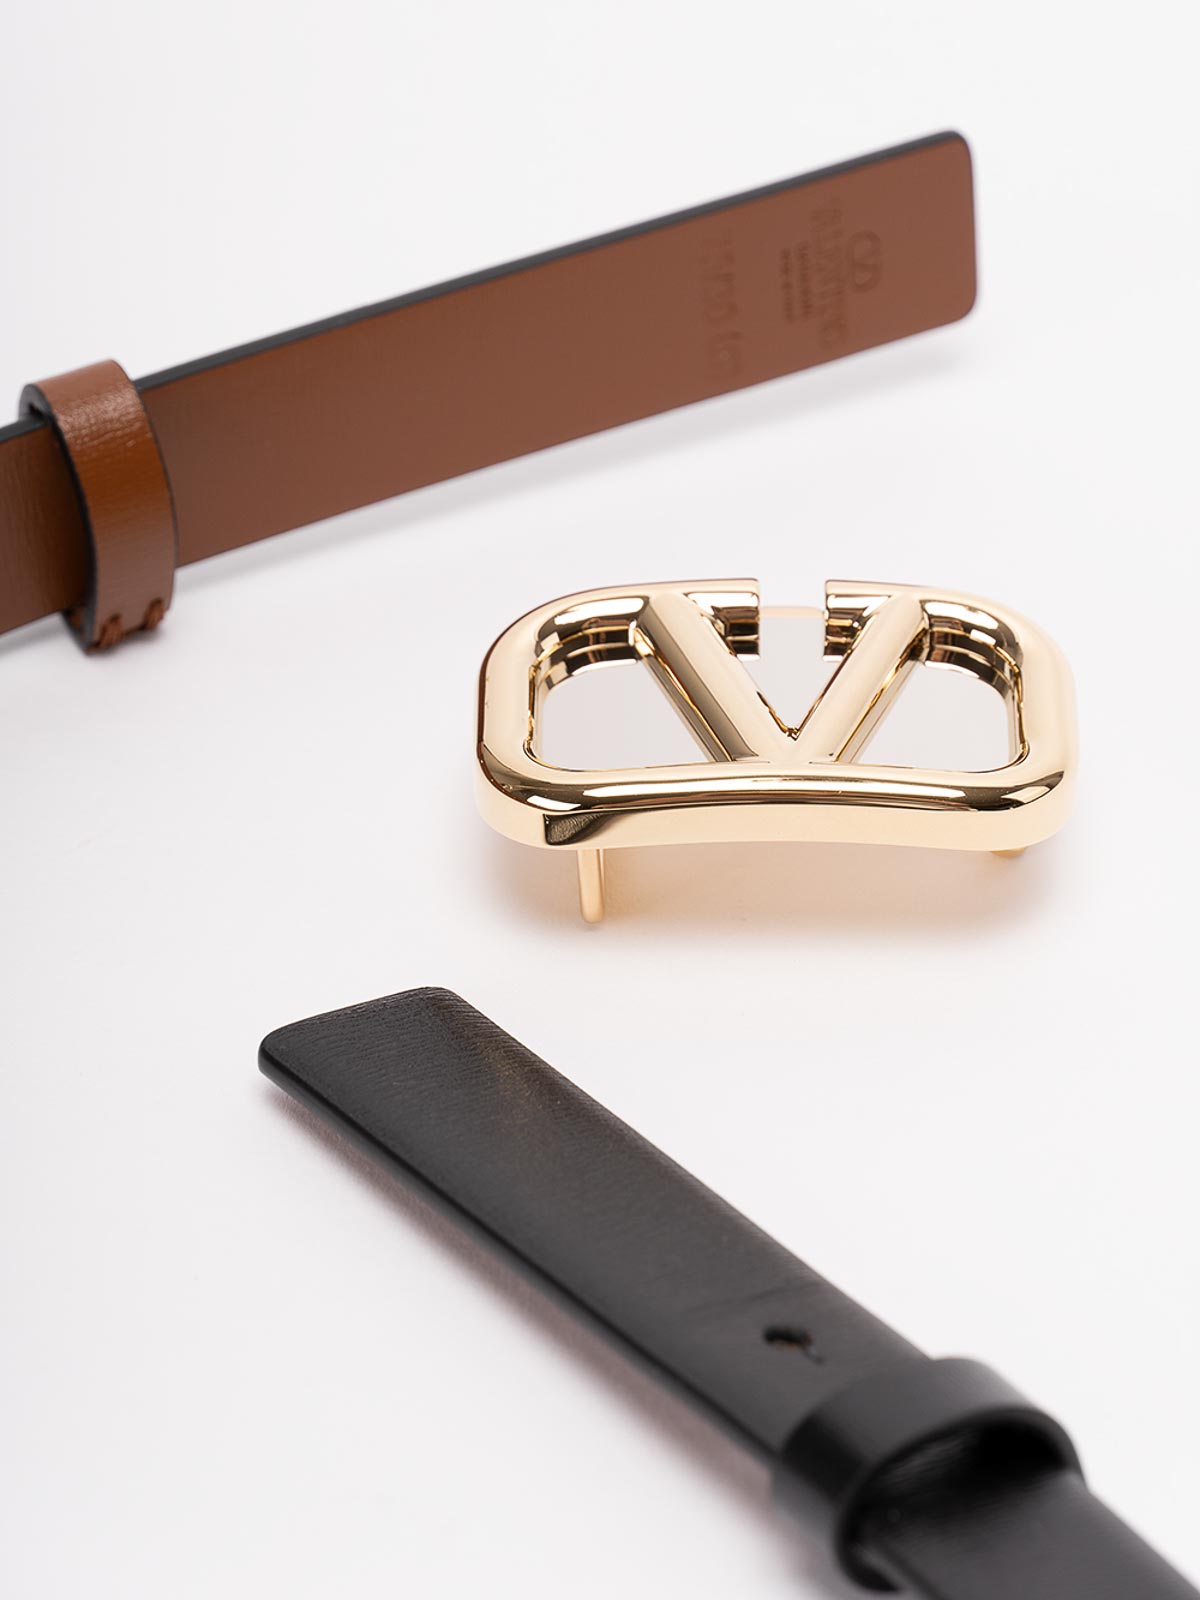 VLogo Signature buckle belt